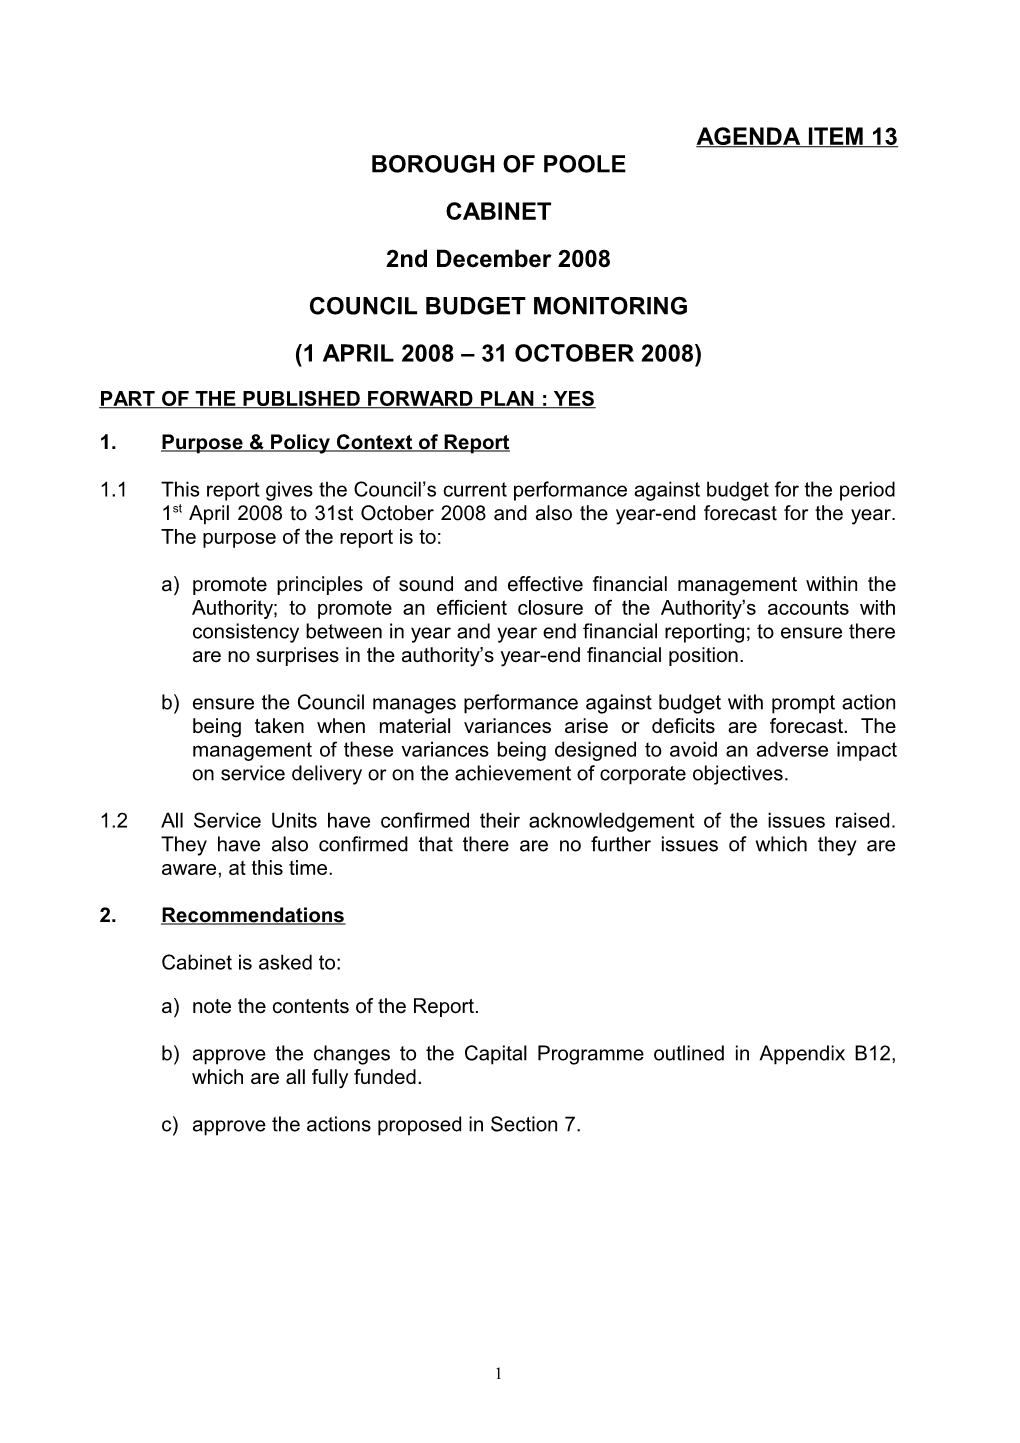 Council Financial Monitoring (1 April 2008 31 October 2008)